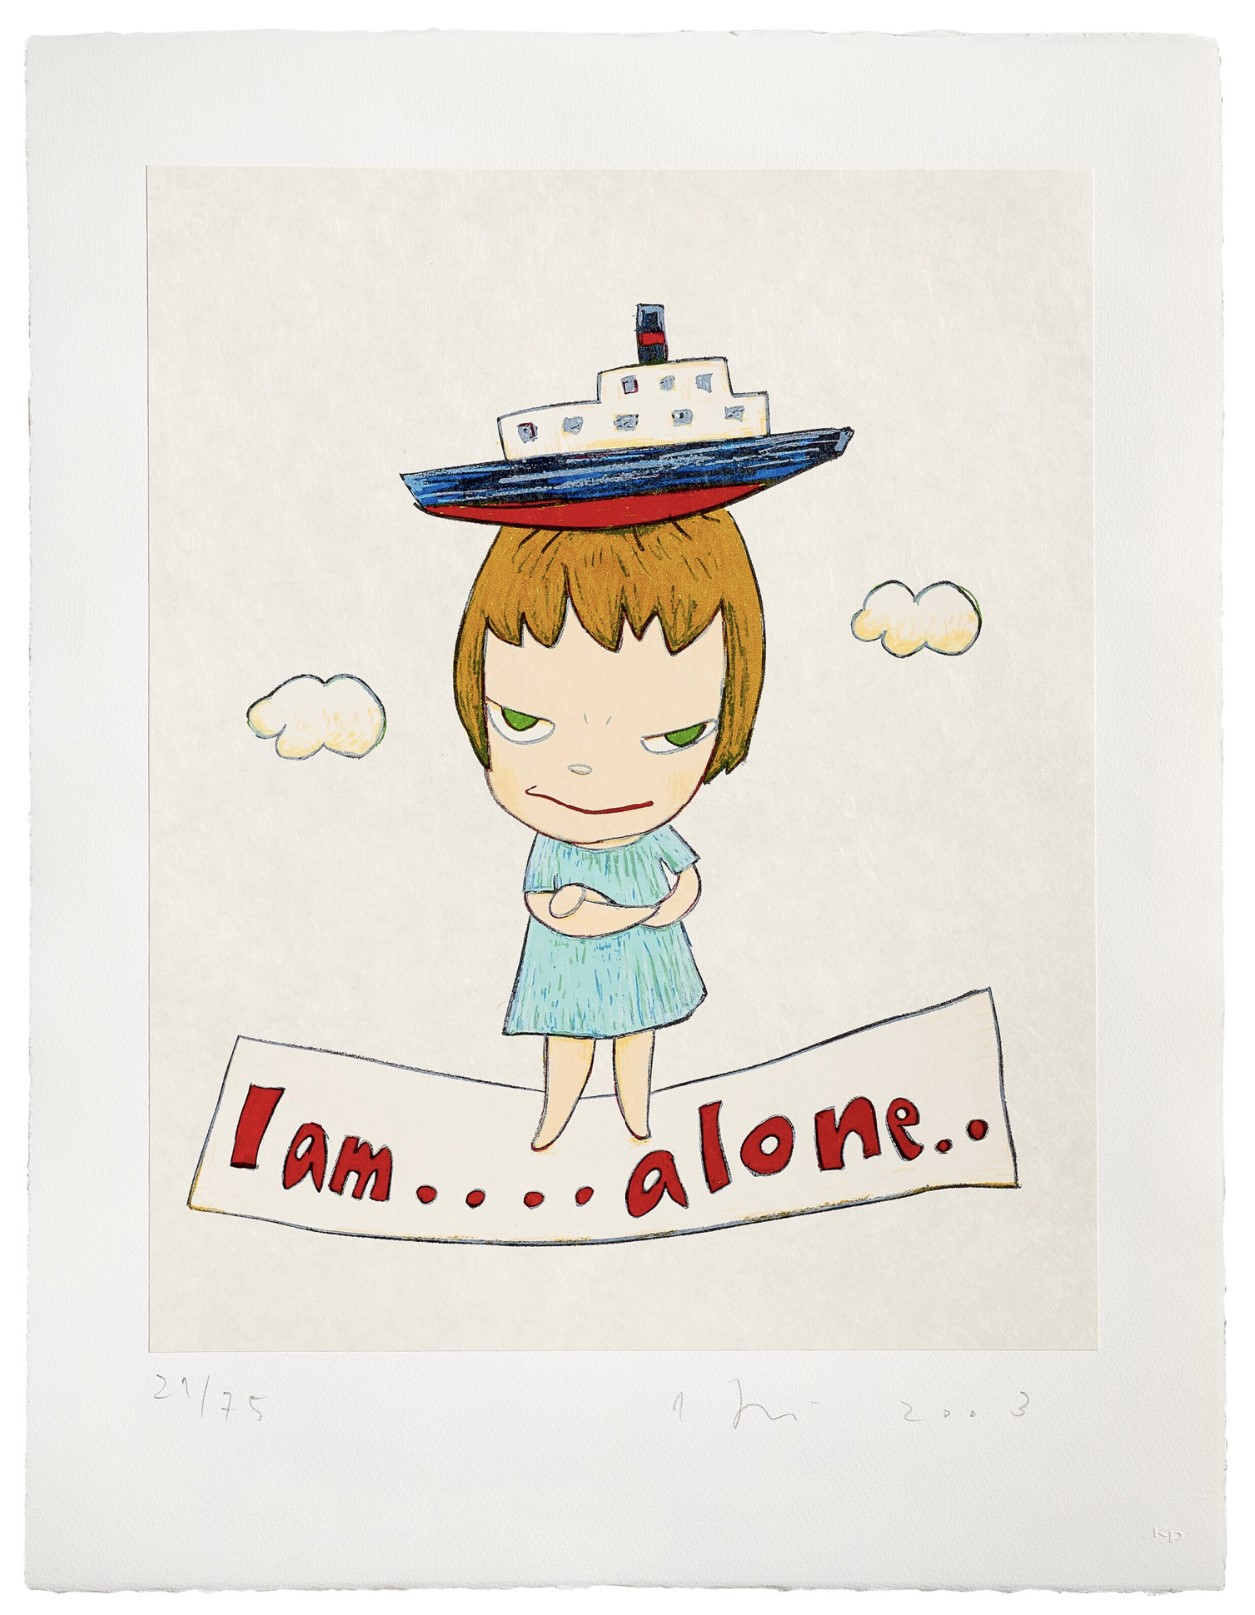 I am Alone (N. Miyamura and S. Suzuki, eds. E-2003-003)